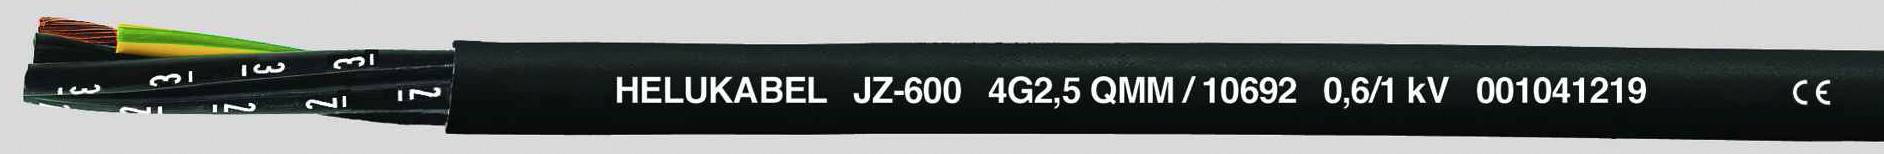 HELUKABEL JZ-600 Steuerleitung 3 G 1 mm² Schwarz 10617-500 500 m